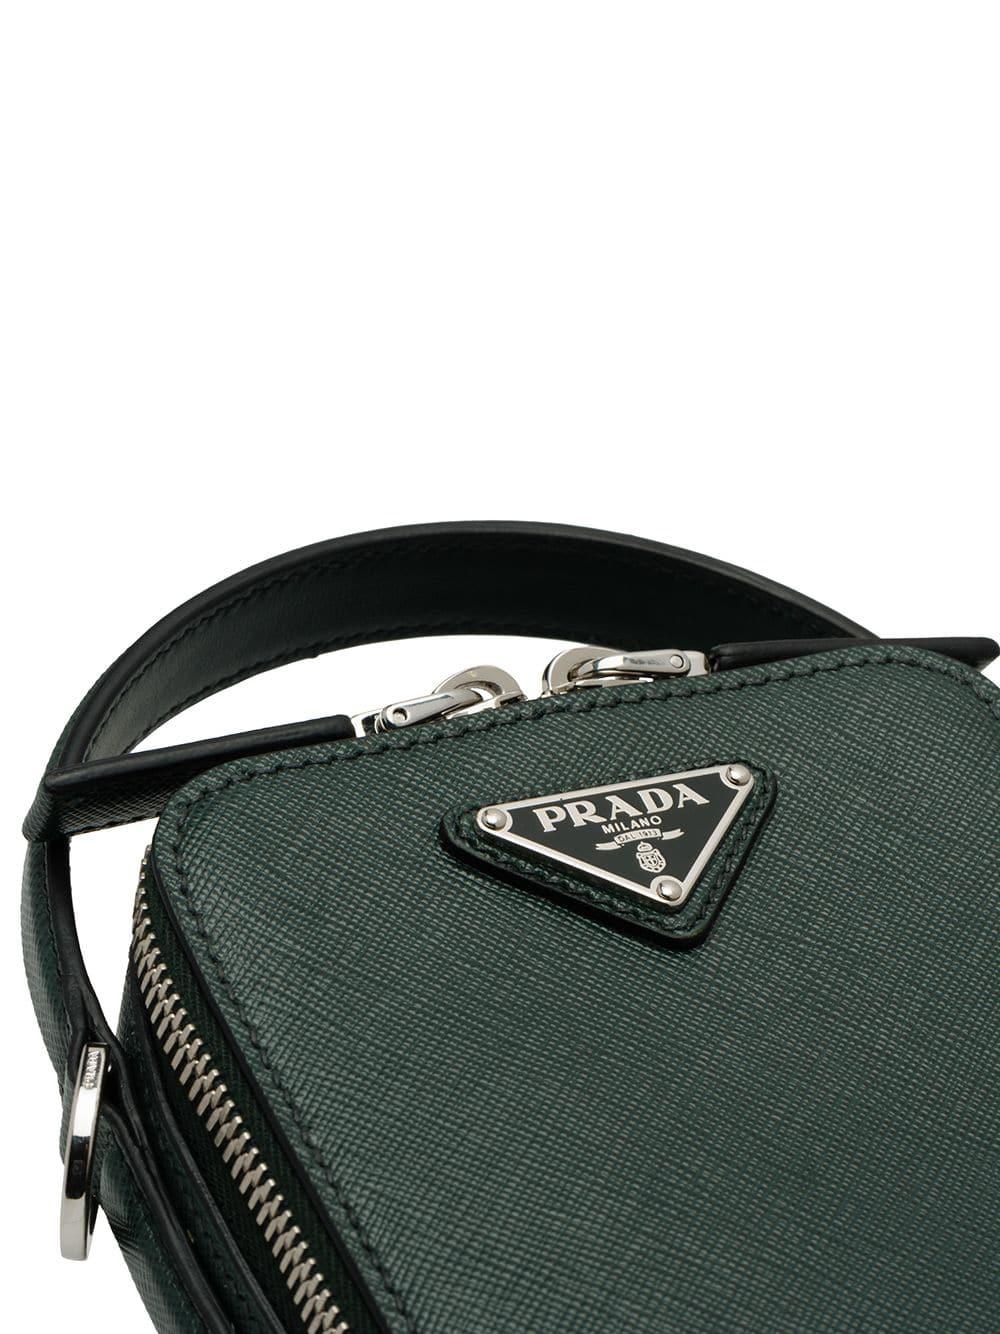 Prada Men's Brique Saffiano Leather Bag